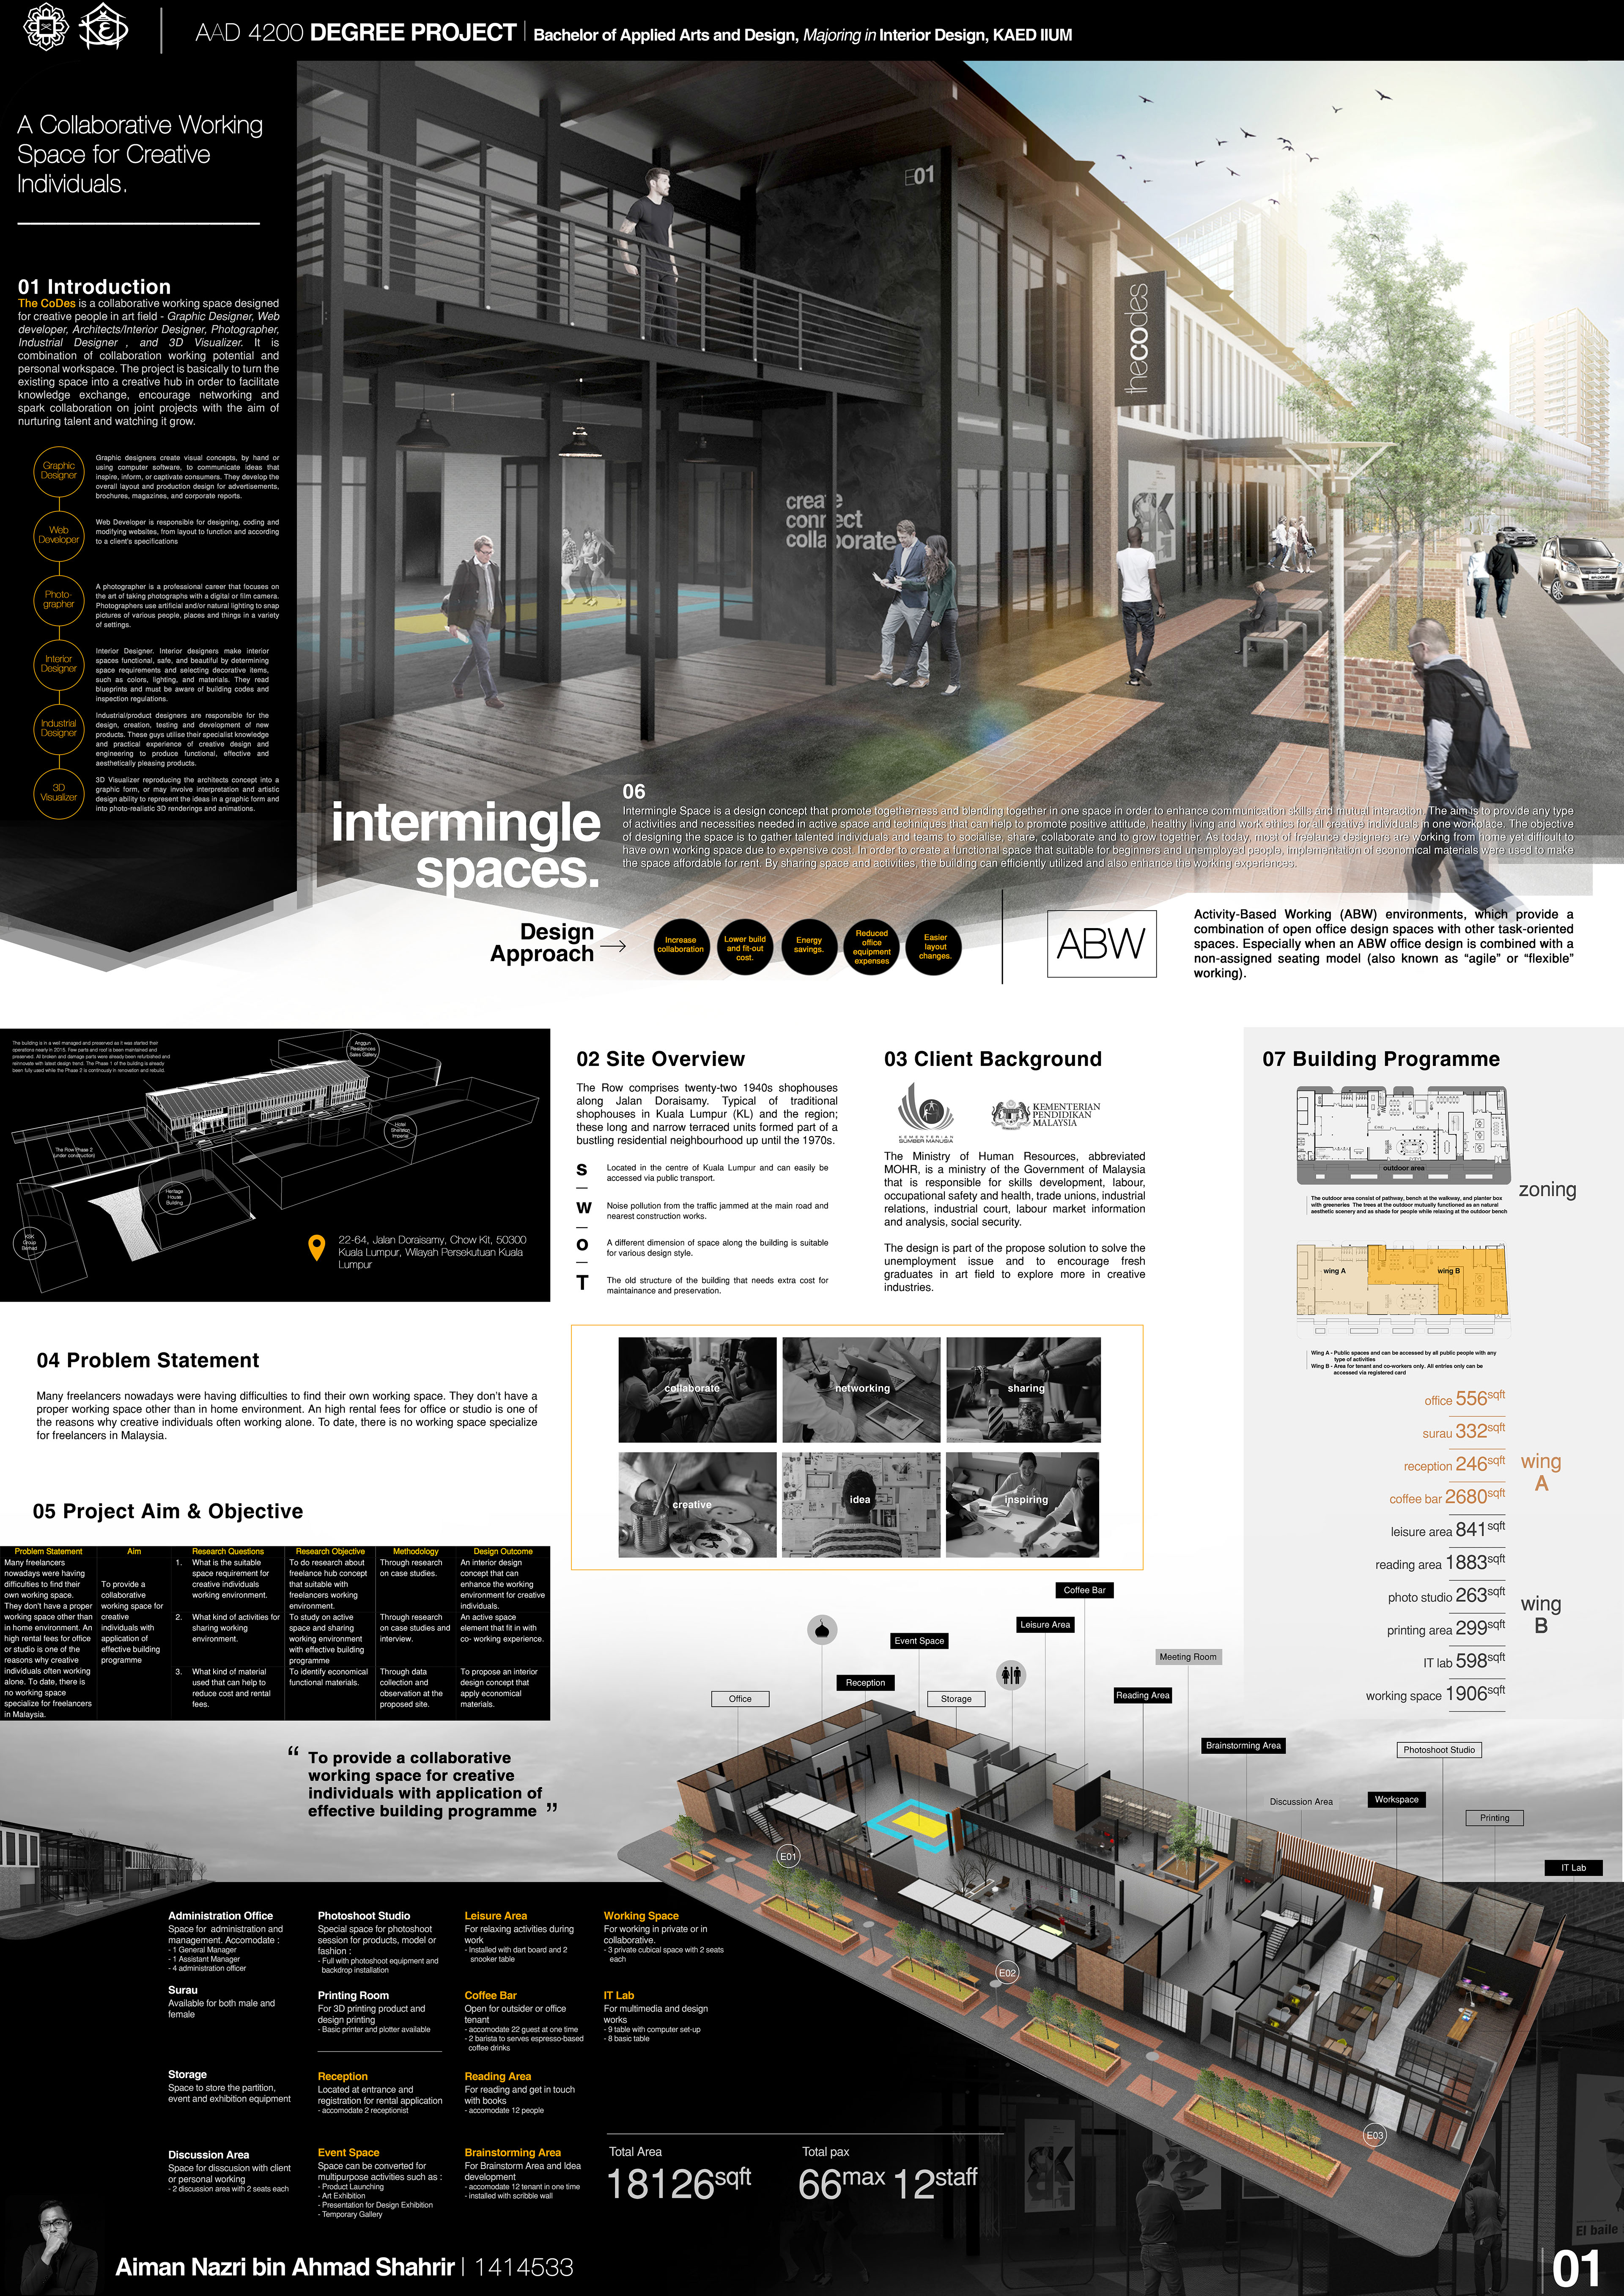 Charming Interior Design Poster - Design Architecture Presentation Poster -  847x1600 PNG Download - PNGkit